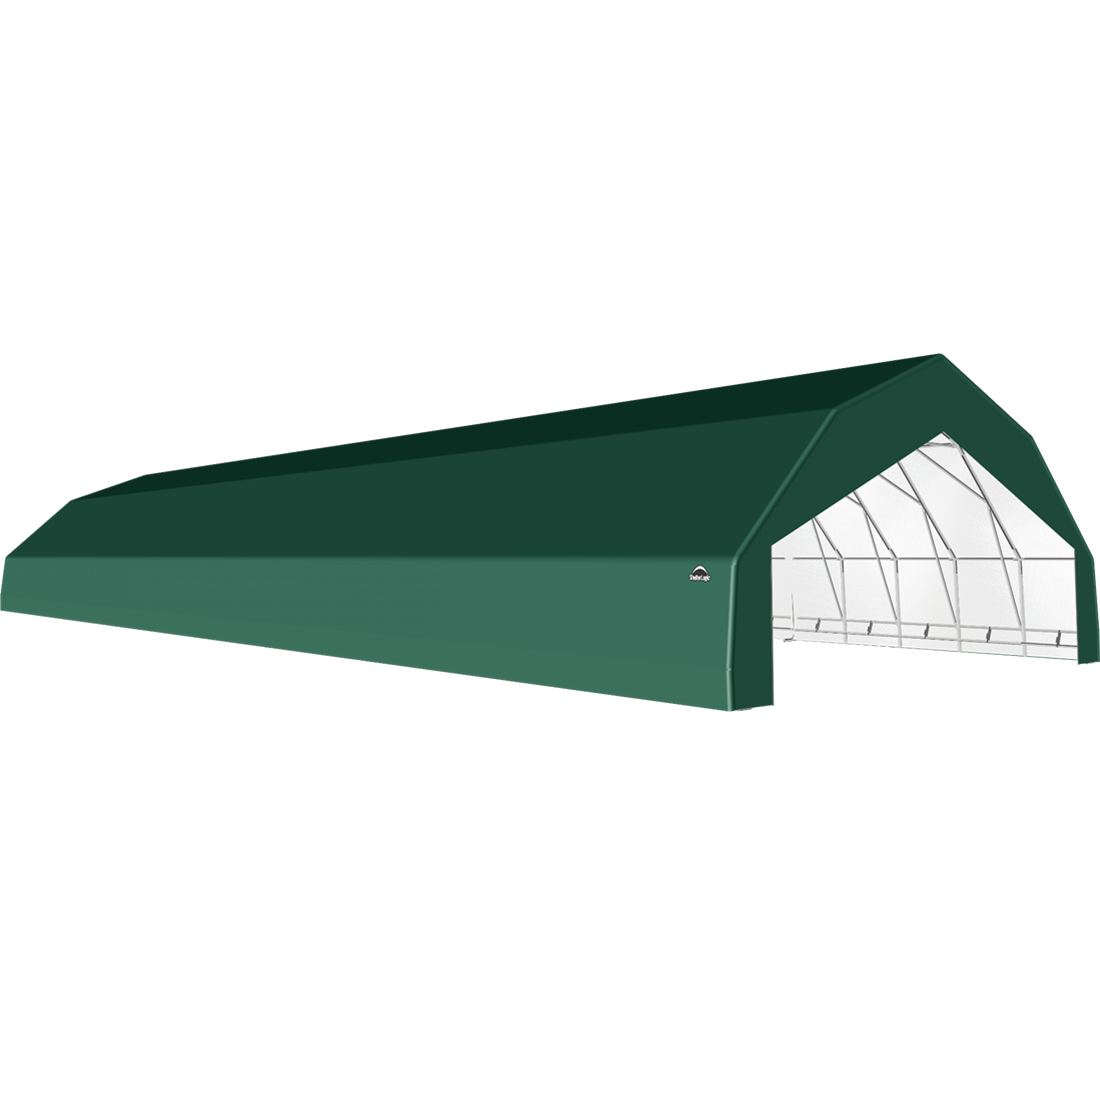 ShelterTech SP Series Barn Shelter, 30 ft. x 100 ft. x 15 ft. Heavy Duty PVC 14.5 oz. Green